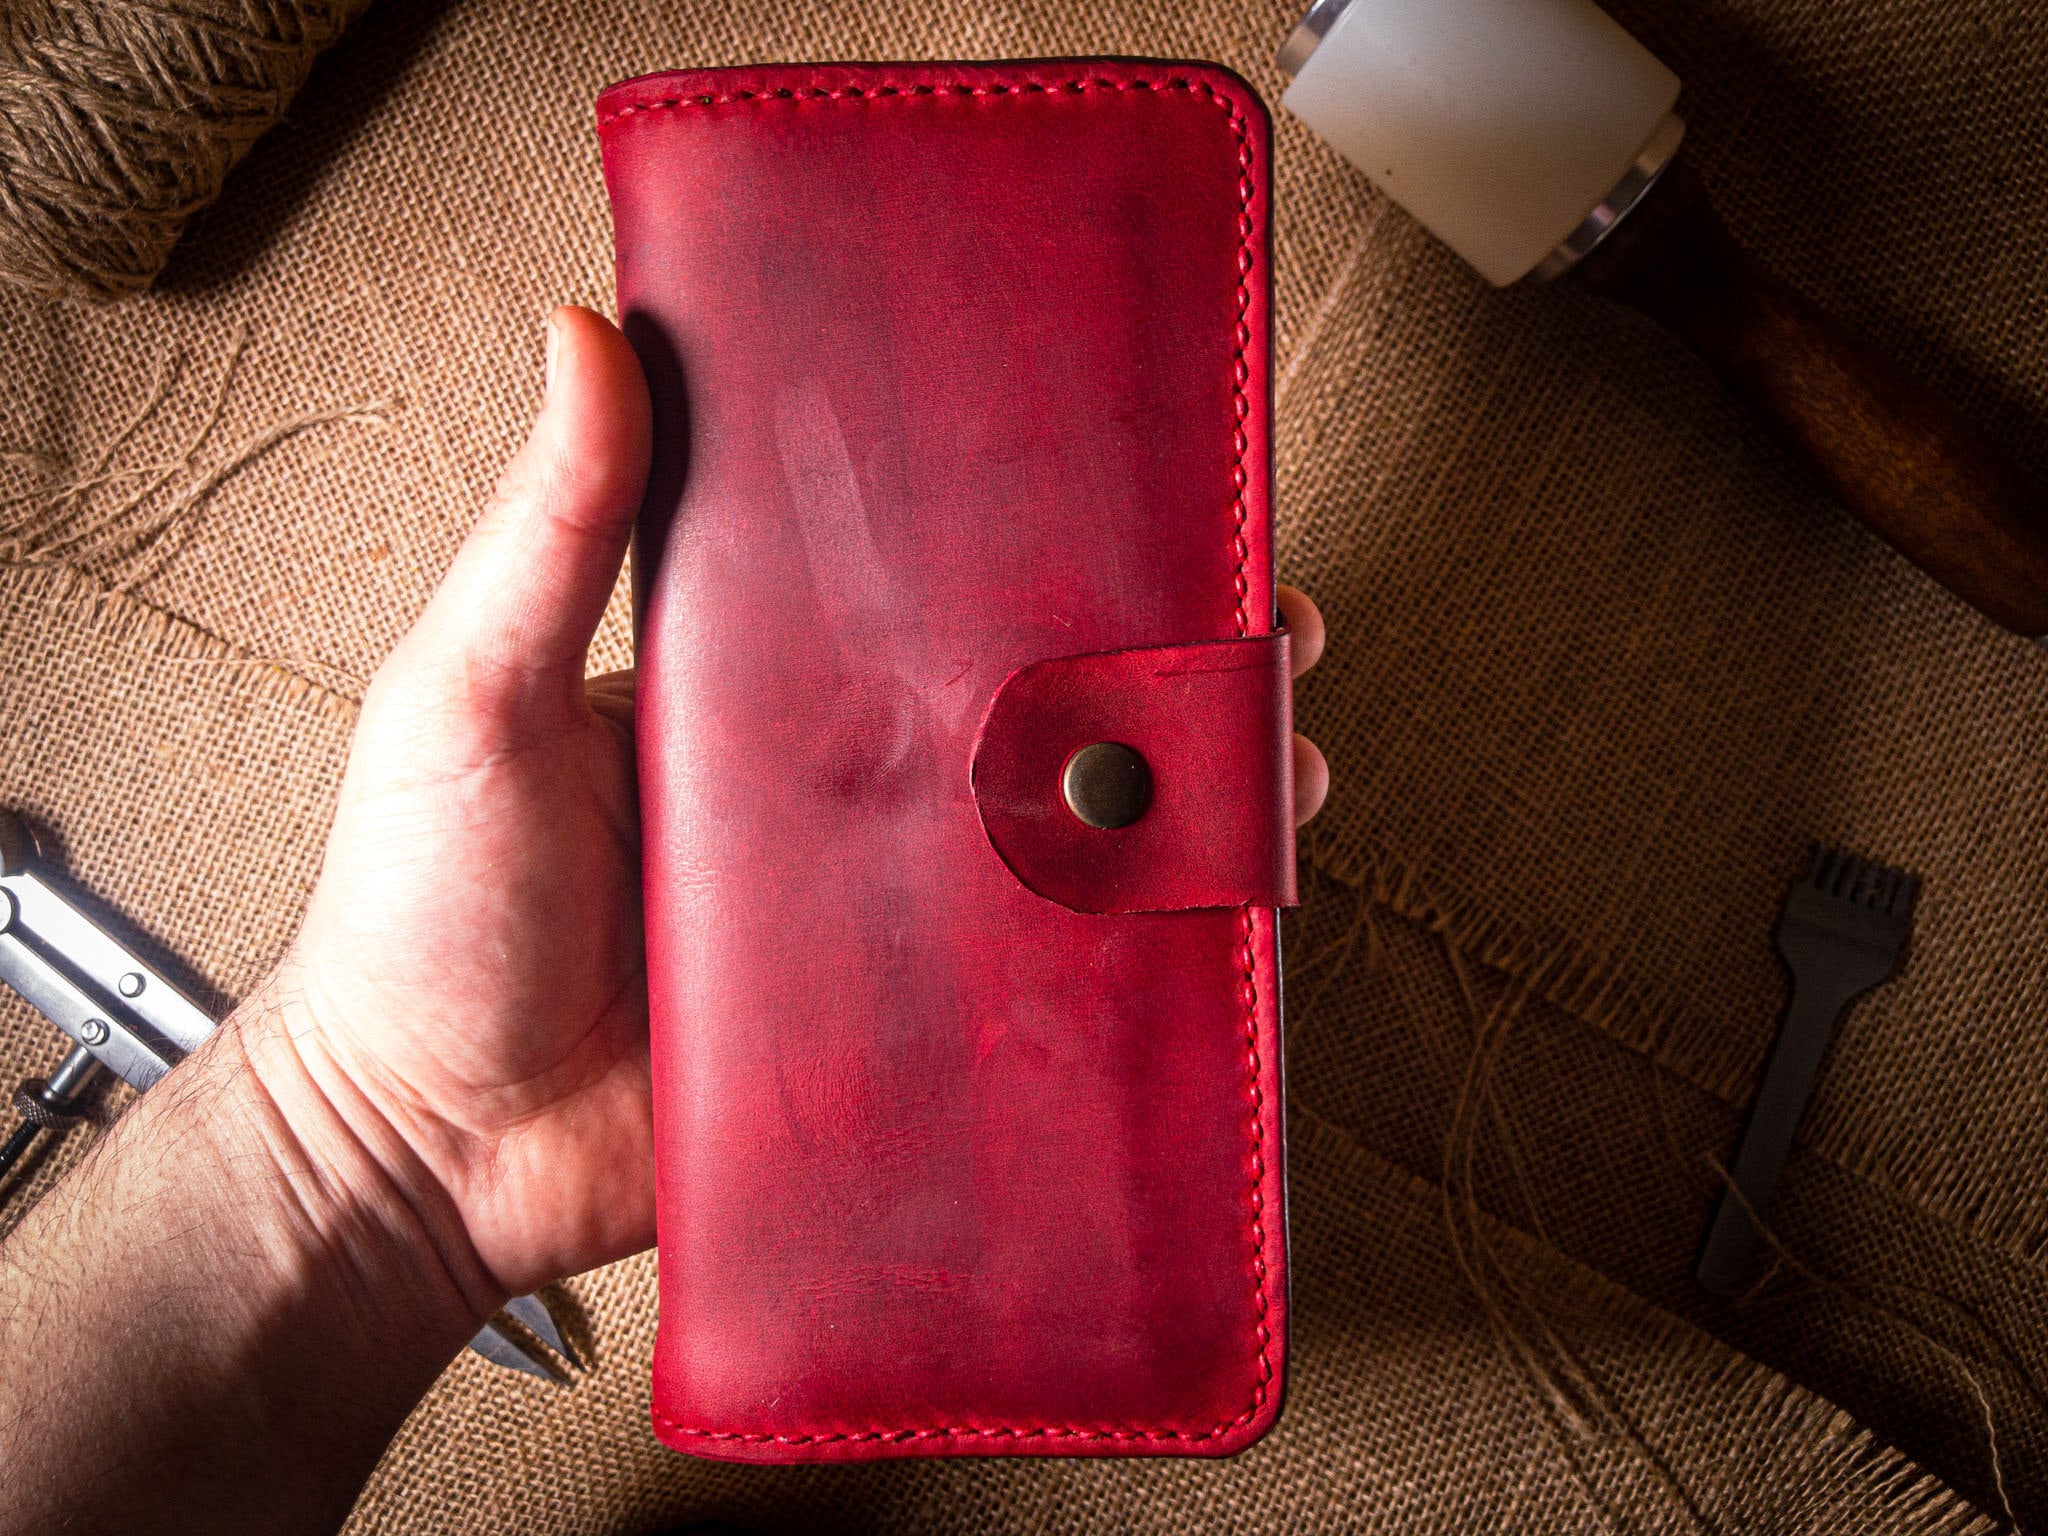 Small RFID Blocking Women Lady Leather Wallet Credit Card Holder Mini Purse  US